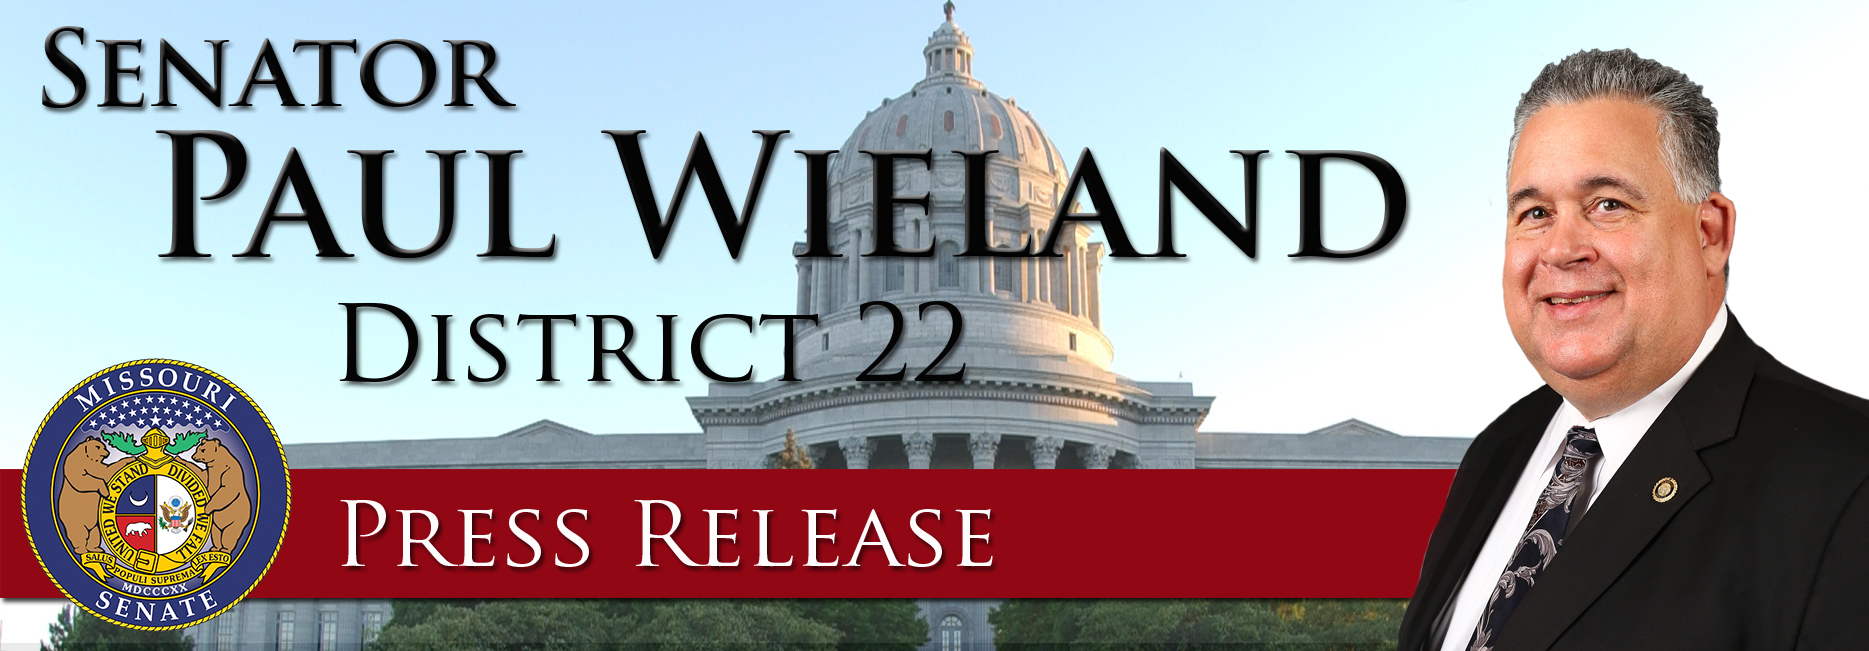 Wieland Banner - Press Release NEW